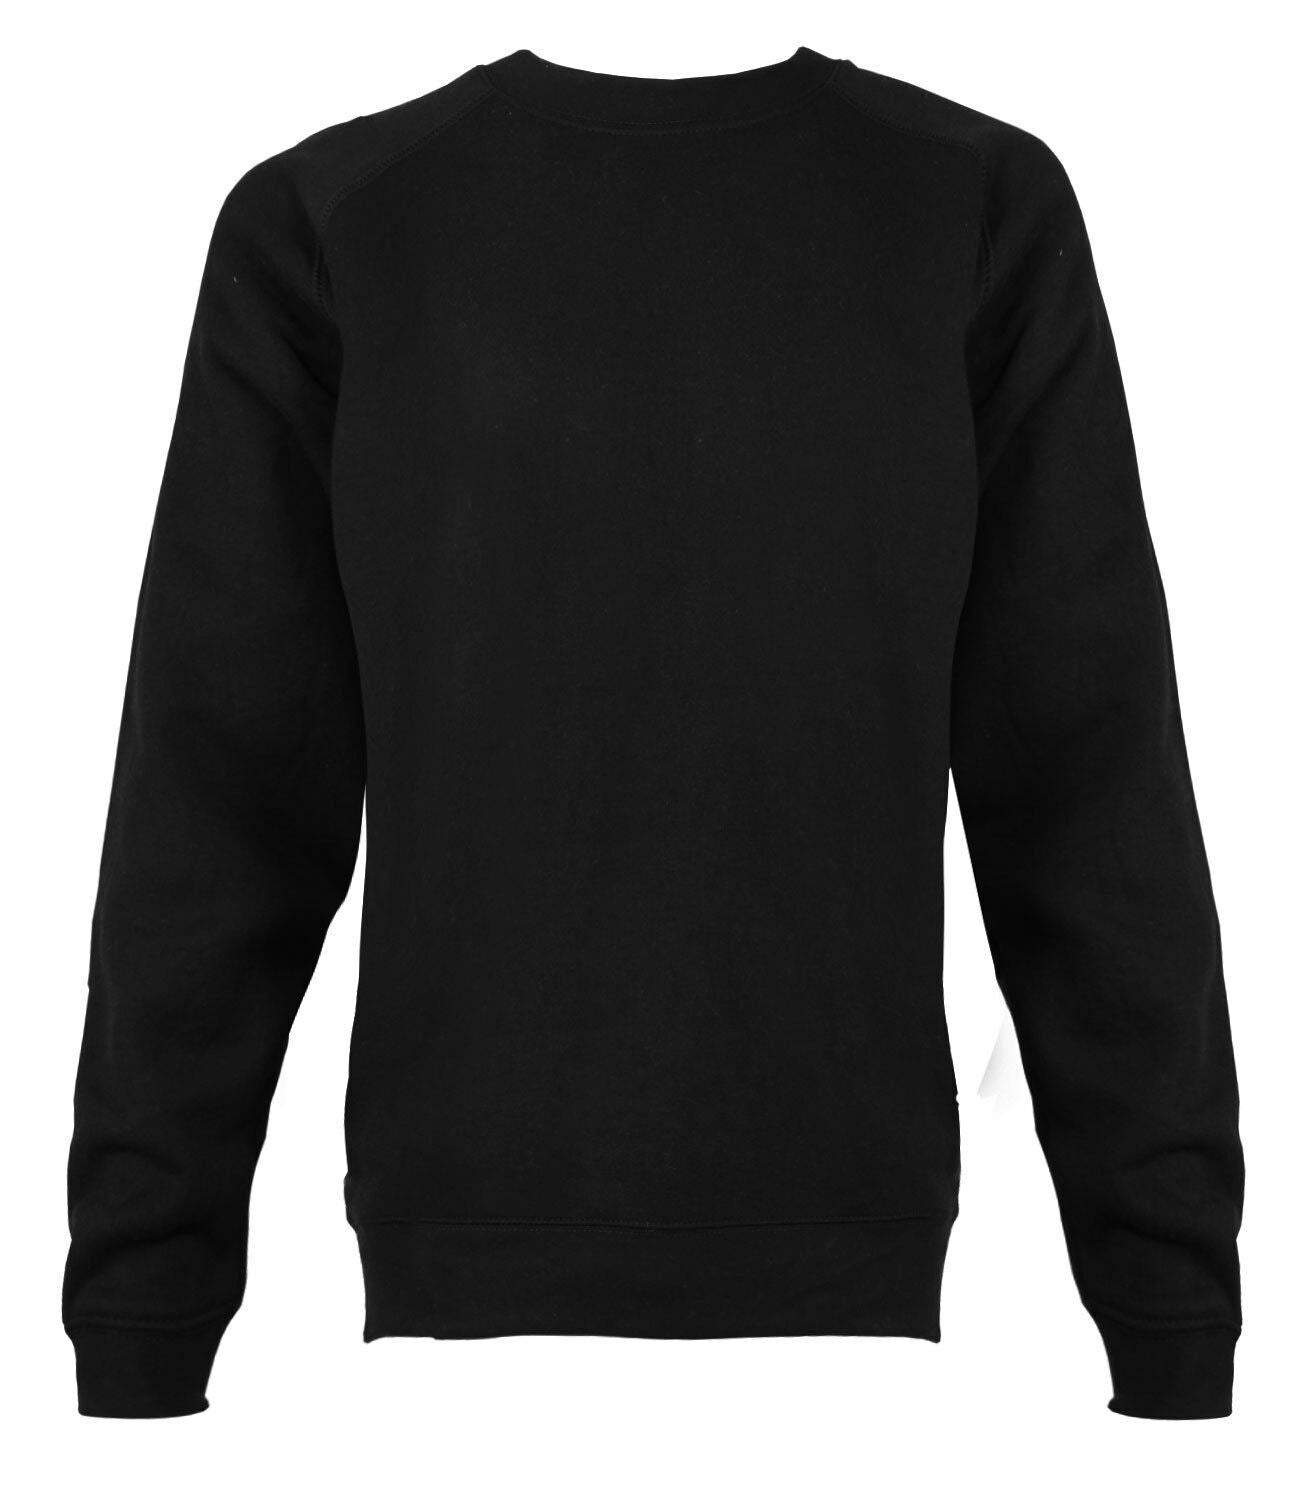 Black / S Girls Sweatshirt Pullover Jumper The Orange Tags